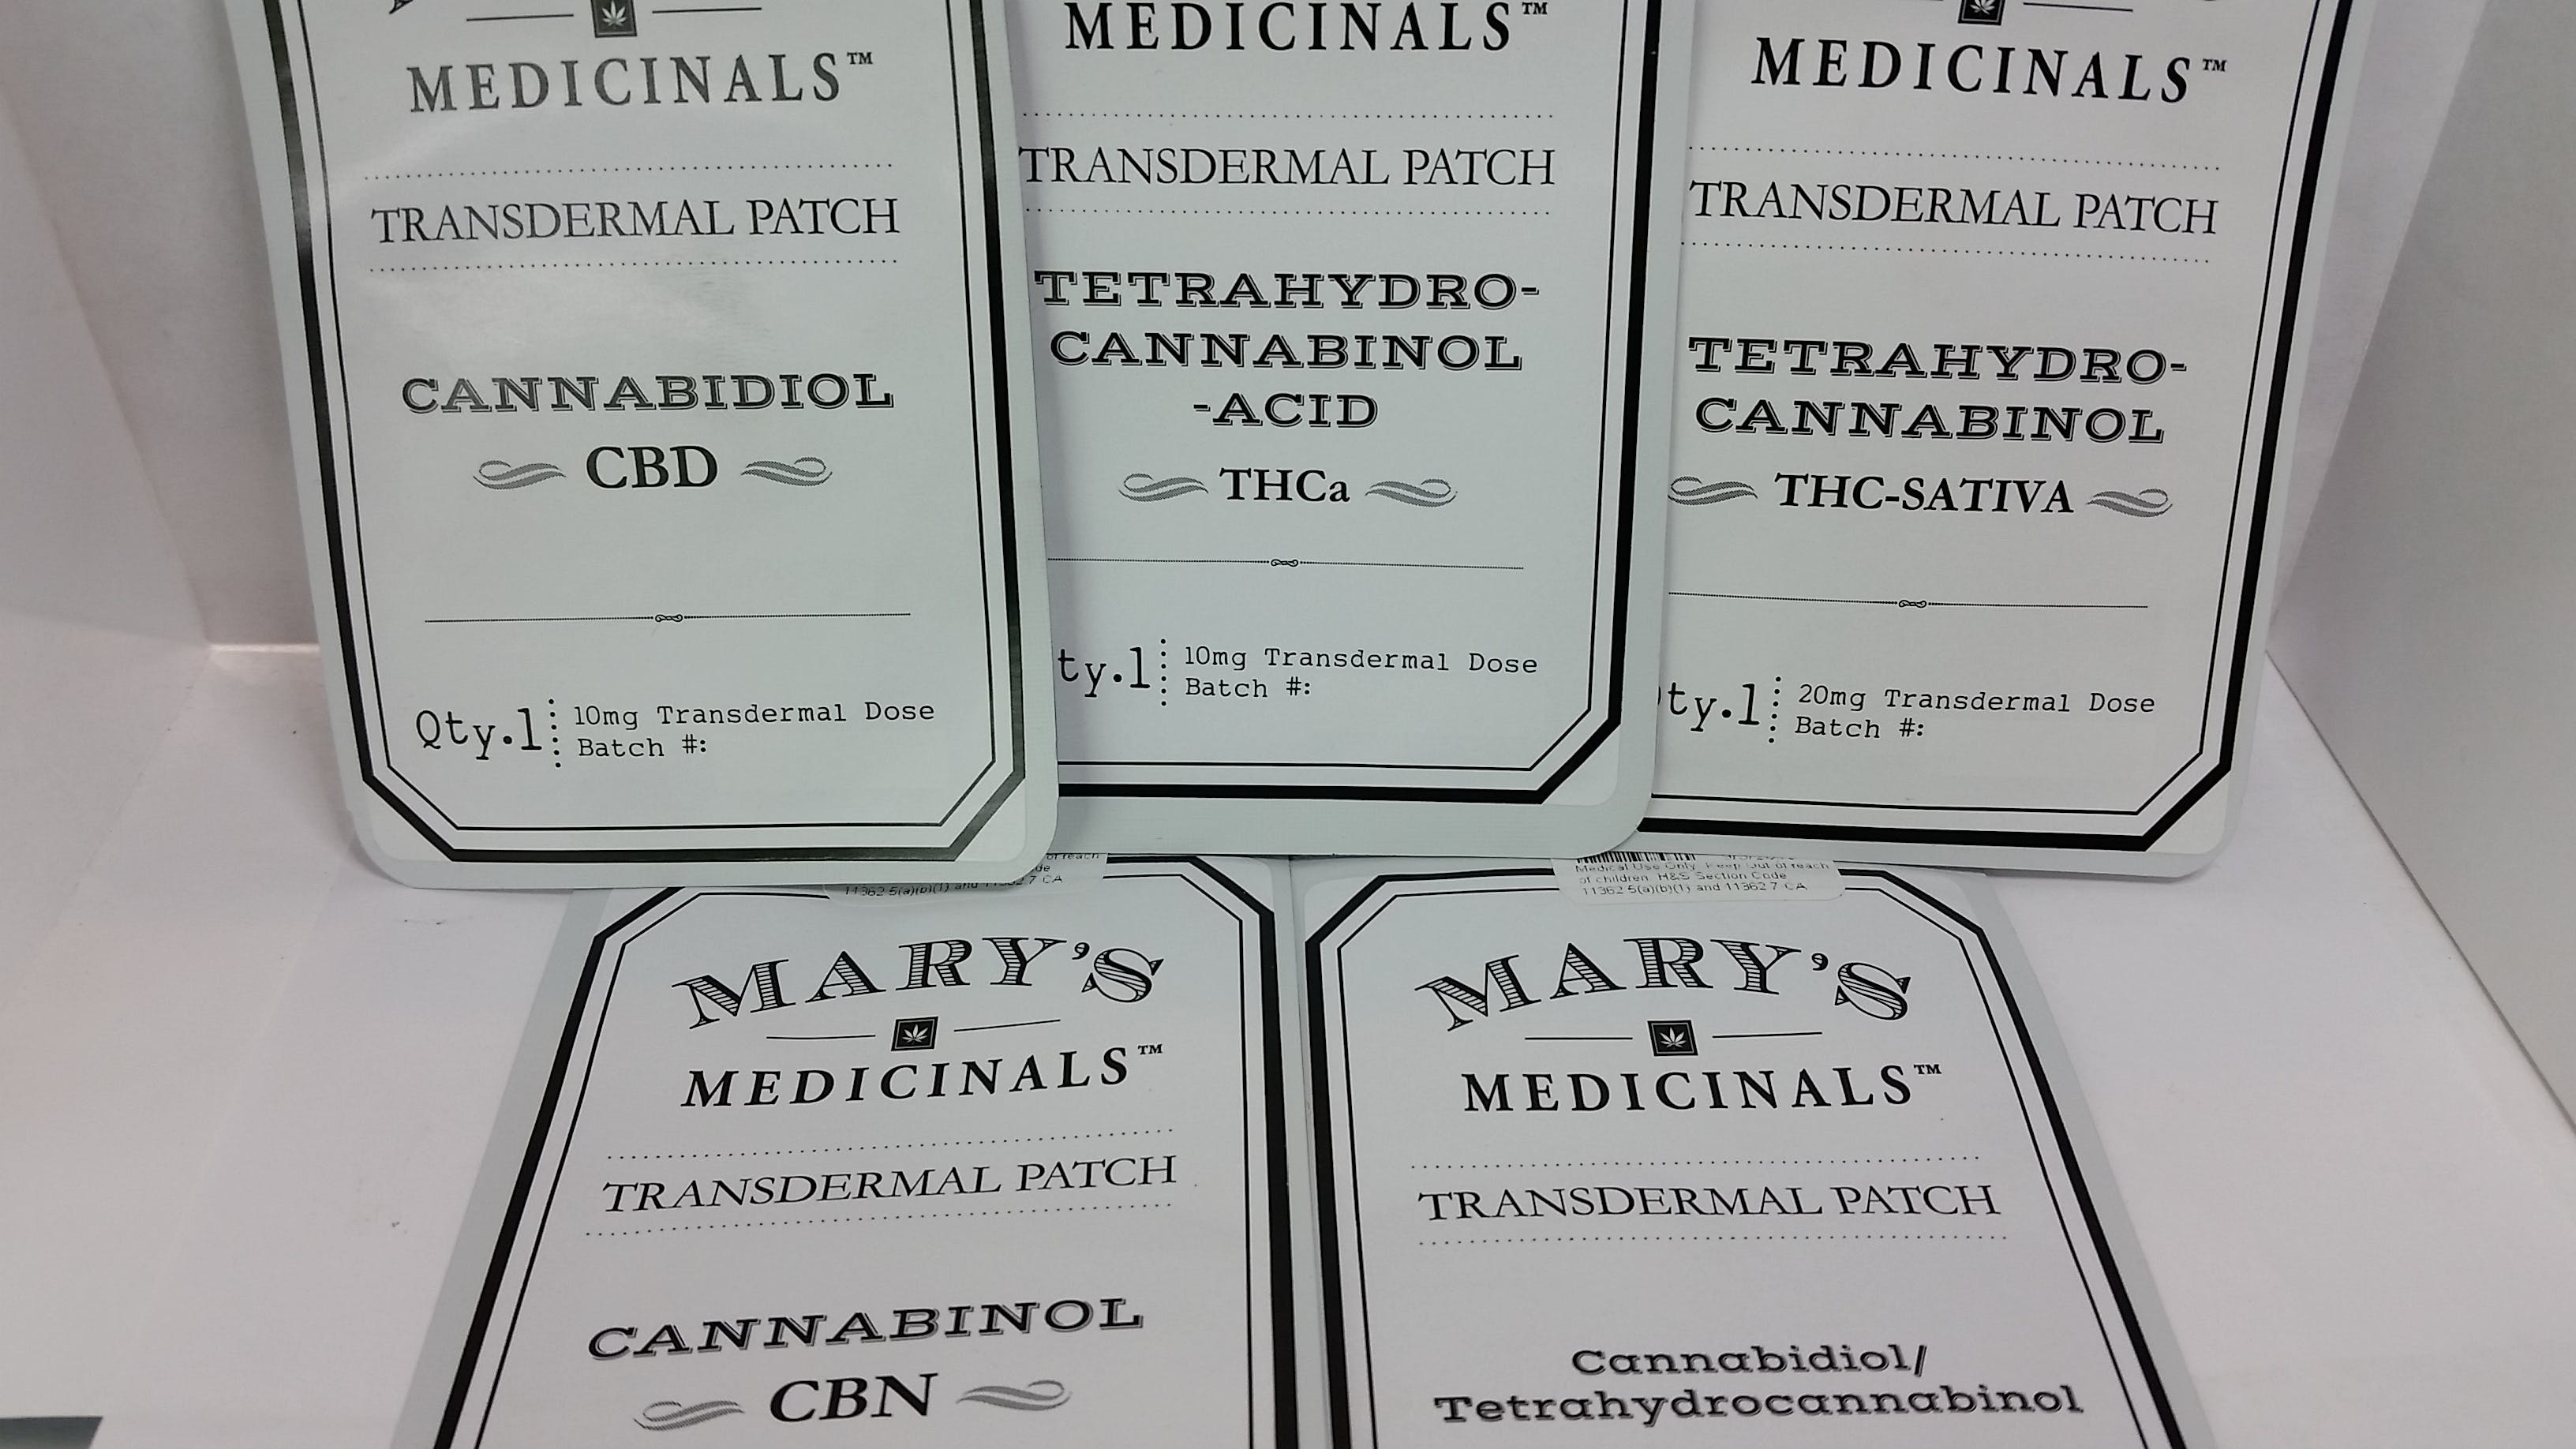 Mary's Medicinals - Transdermal Patch